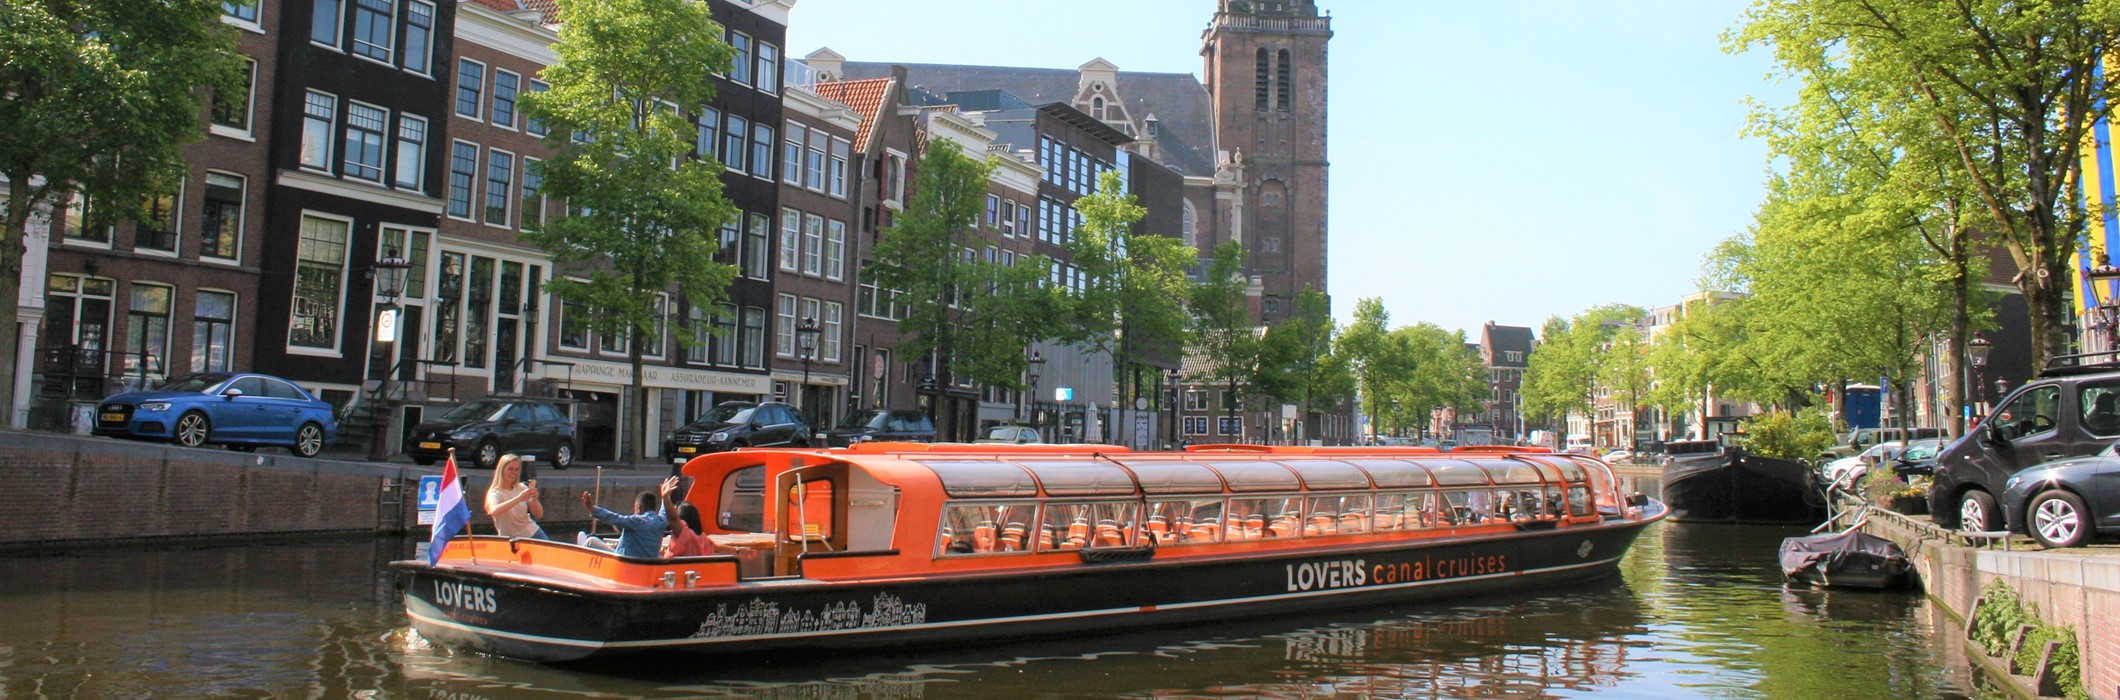 Crociera sui canali di Amsterdam (diparte vicino a Leidseplein)